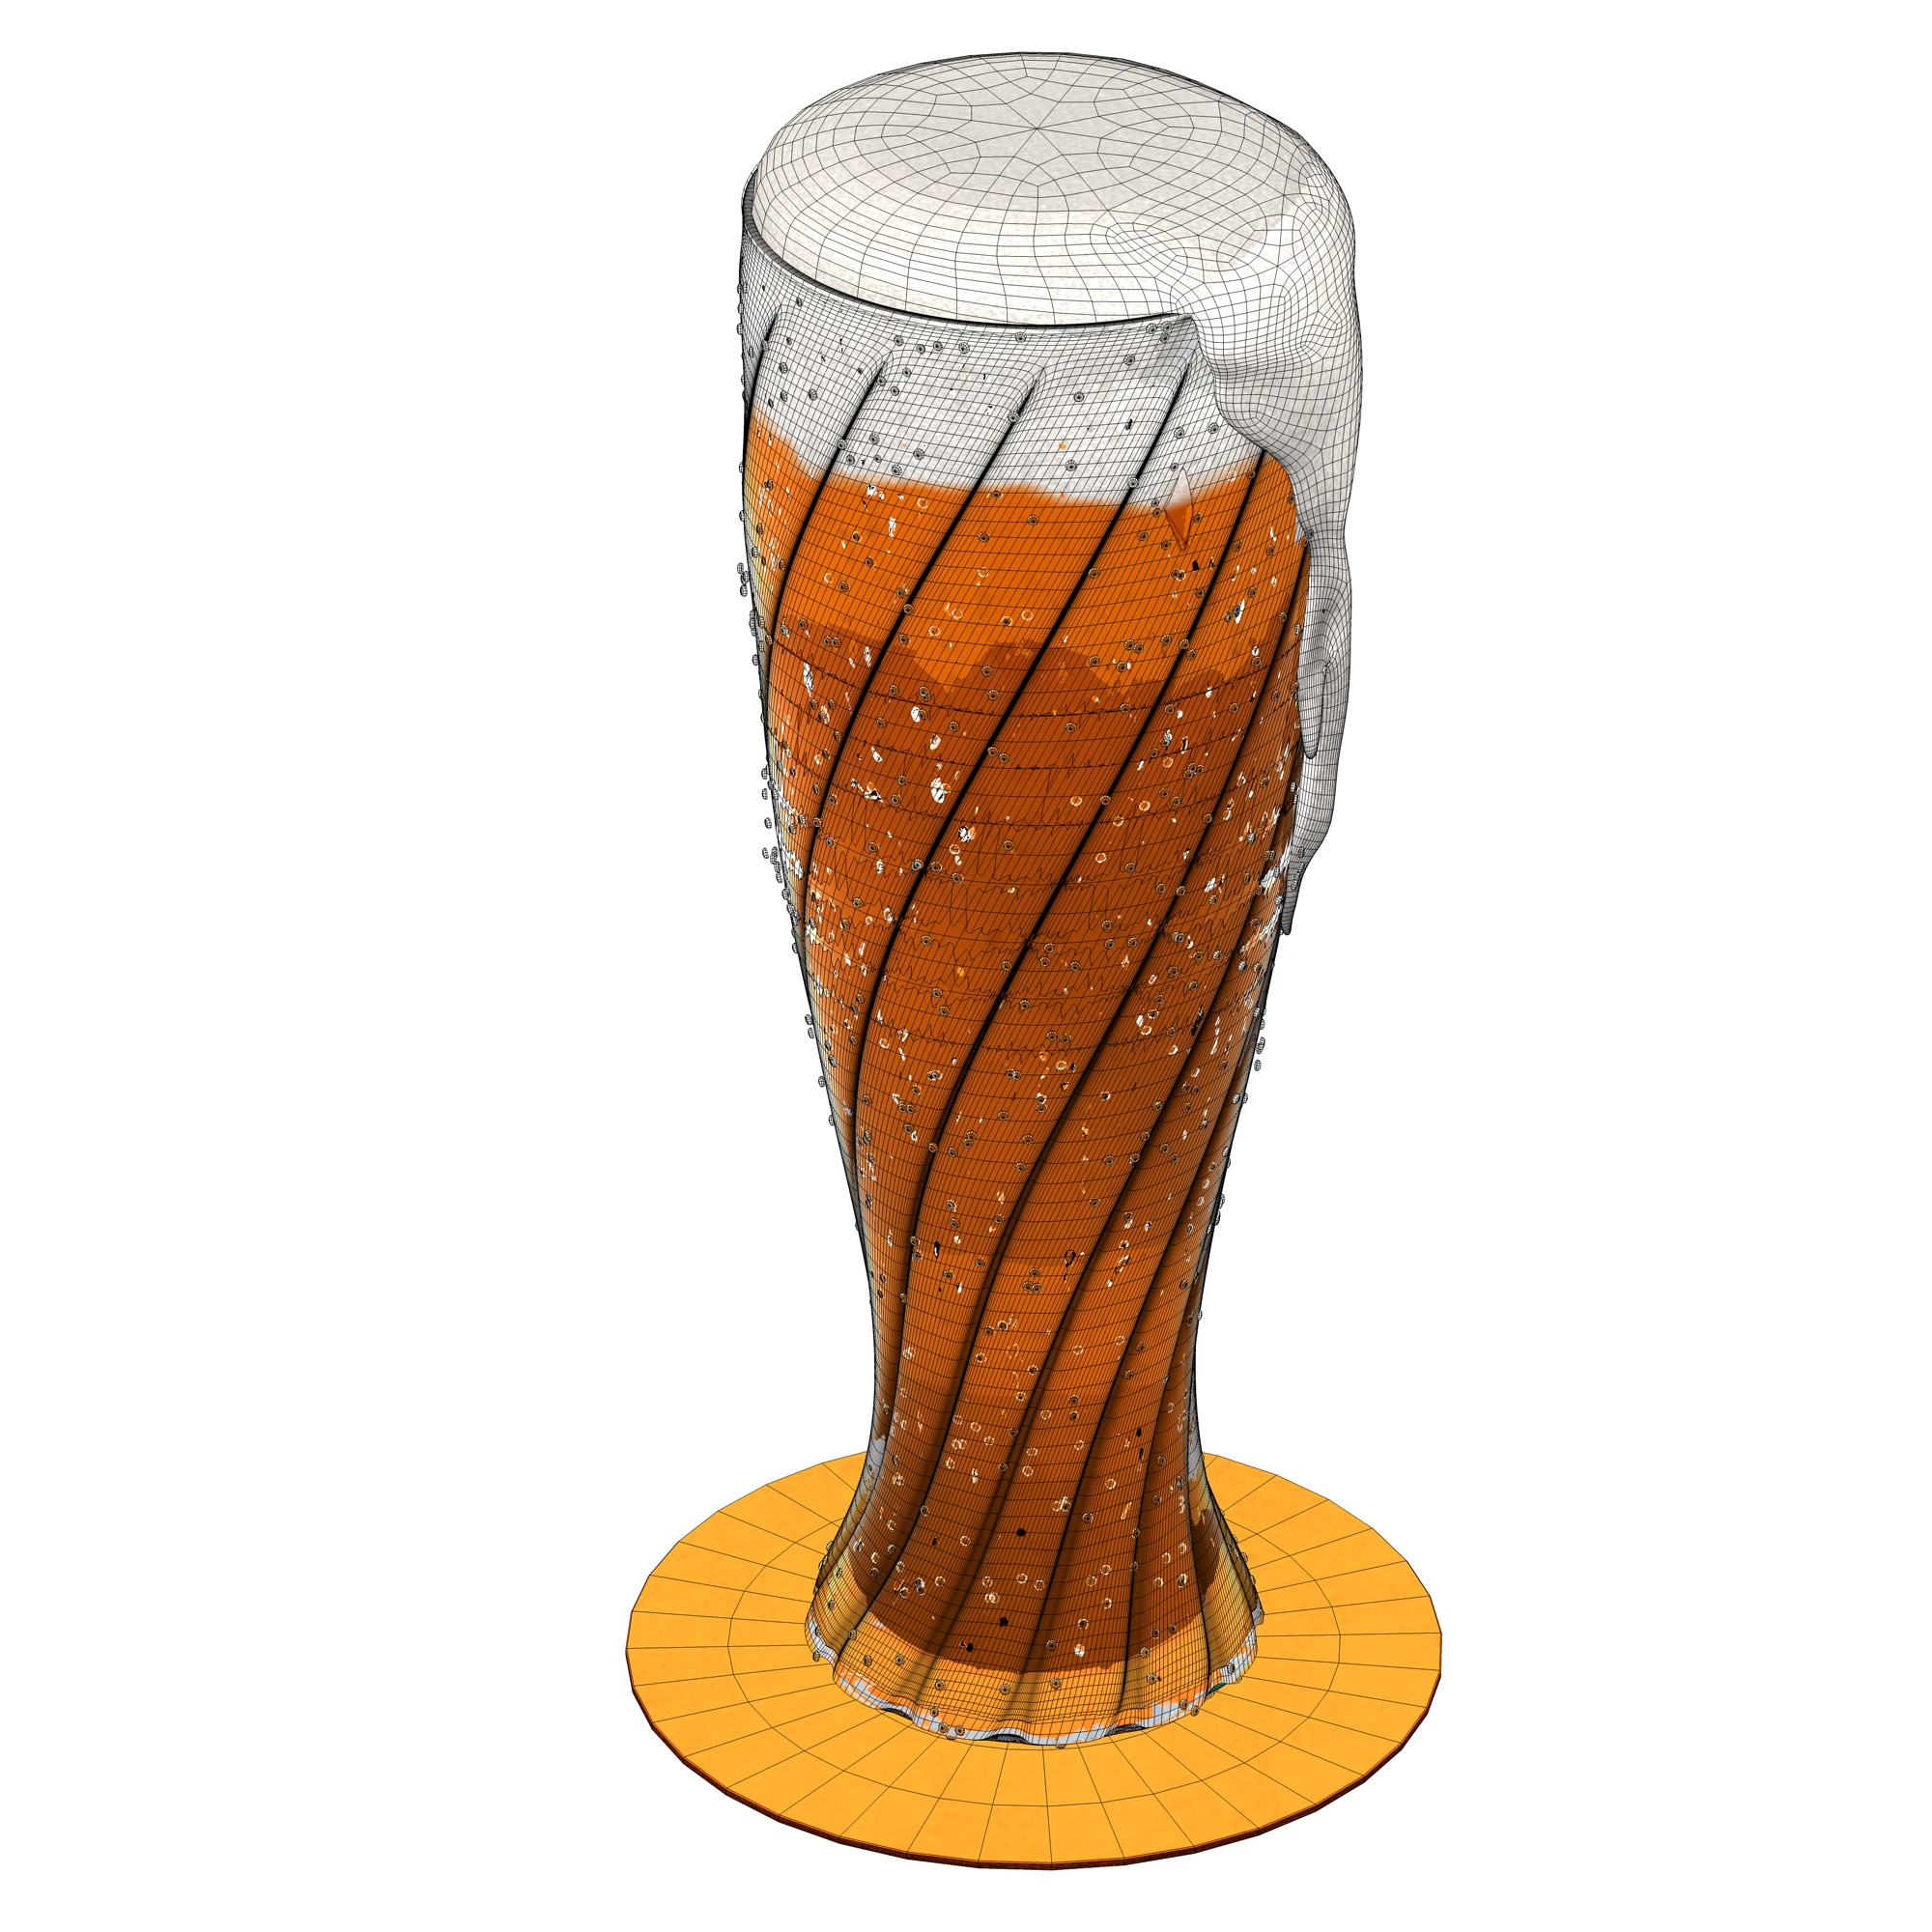 Bierglas 3D-Modell mit Schaum